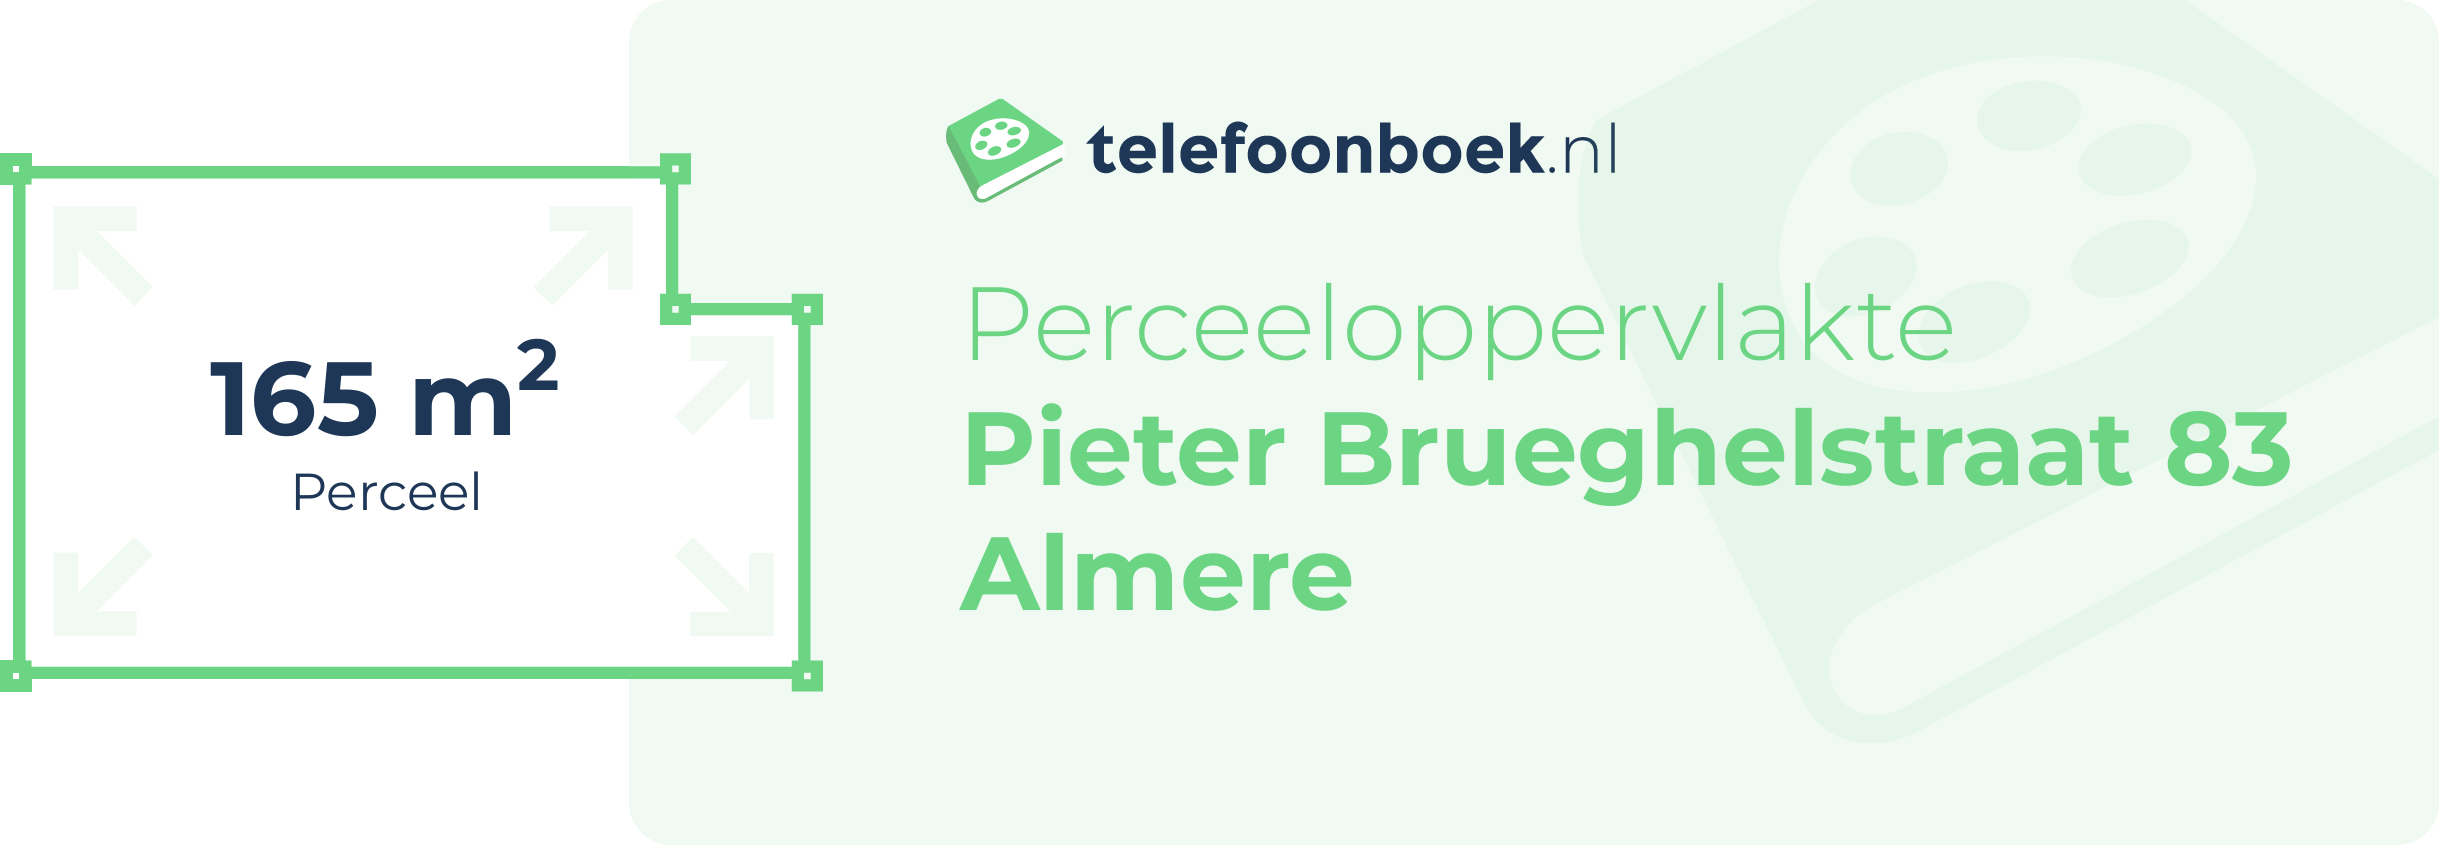 Perceeloppervlakte Pieter Brueghelstraat 83 Almere